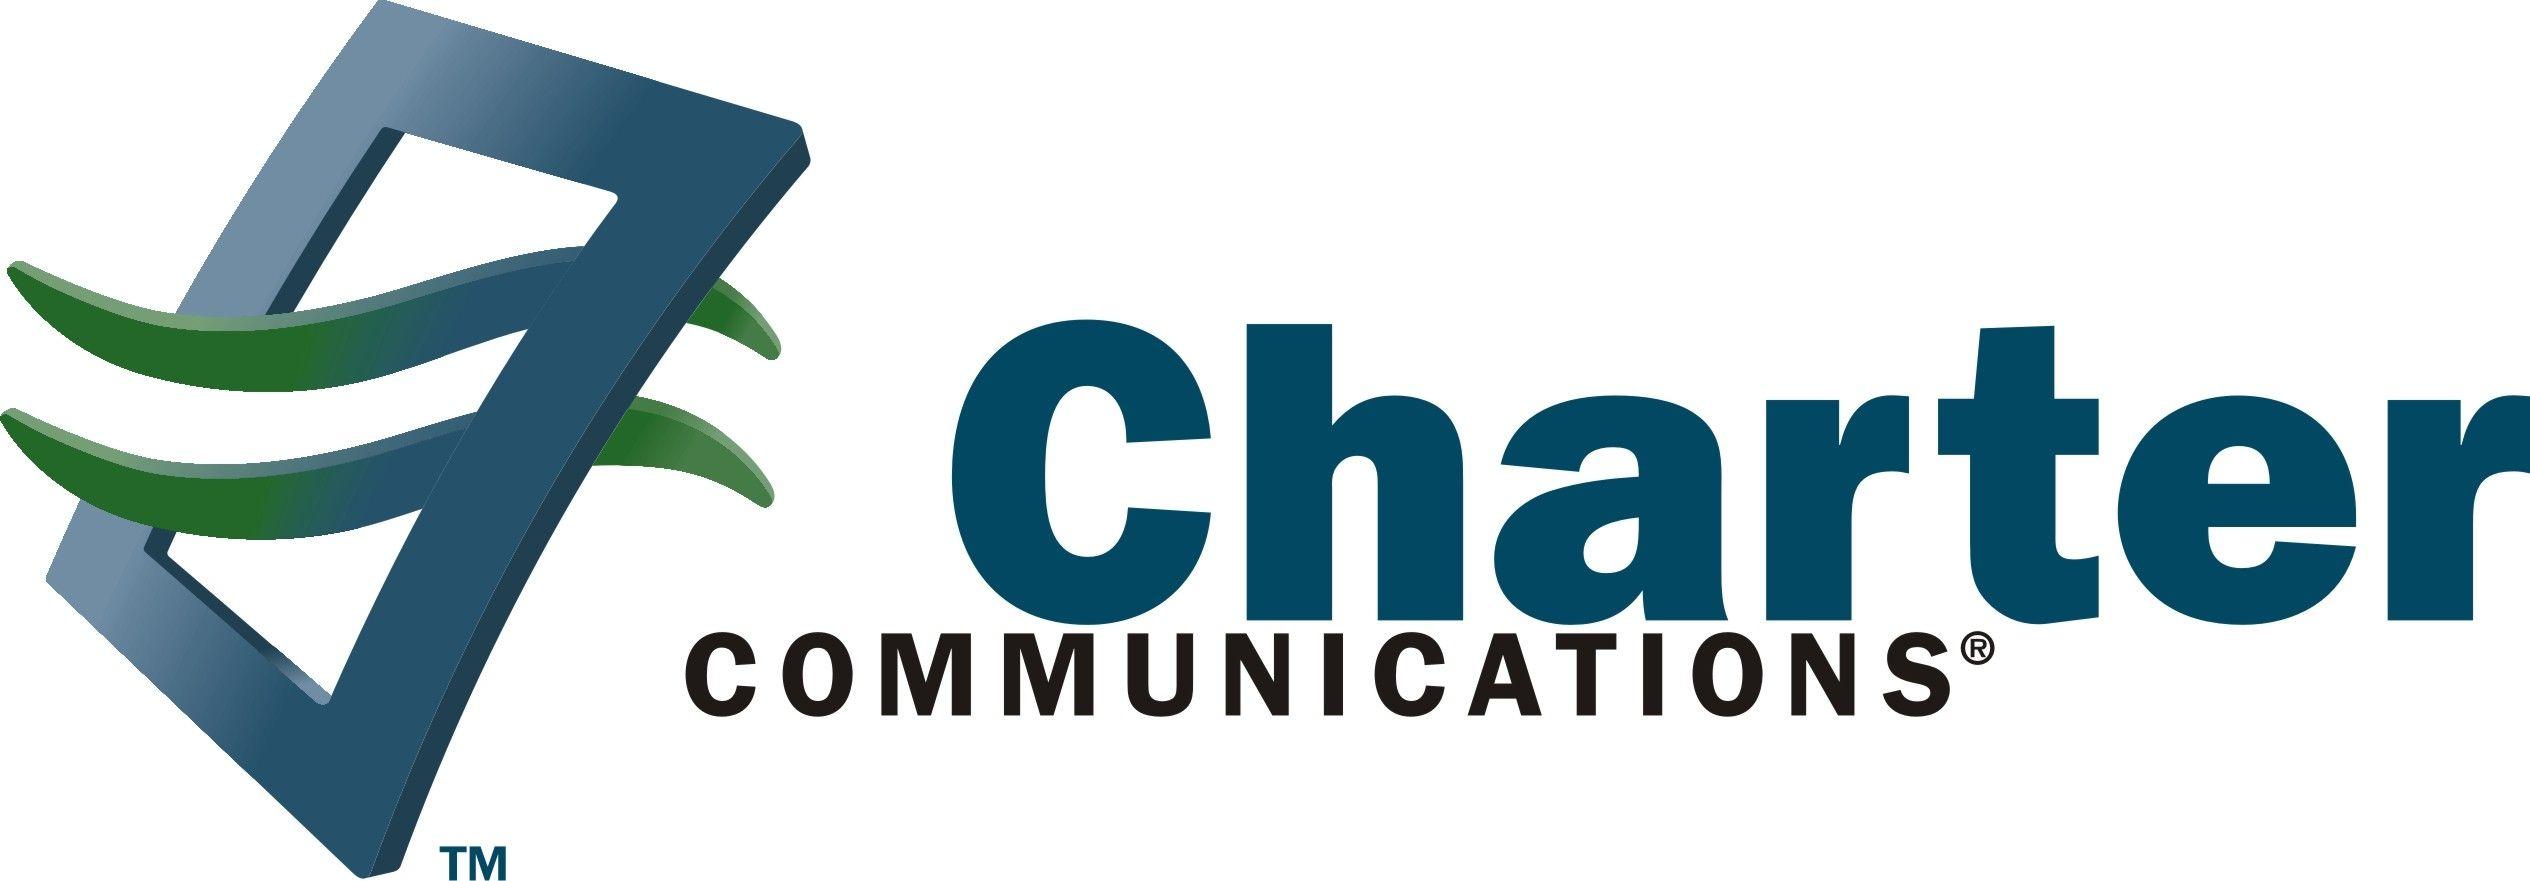 Charter Communications Logo - Charter Communications Logo. AGL (Above Ground Level)